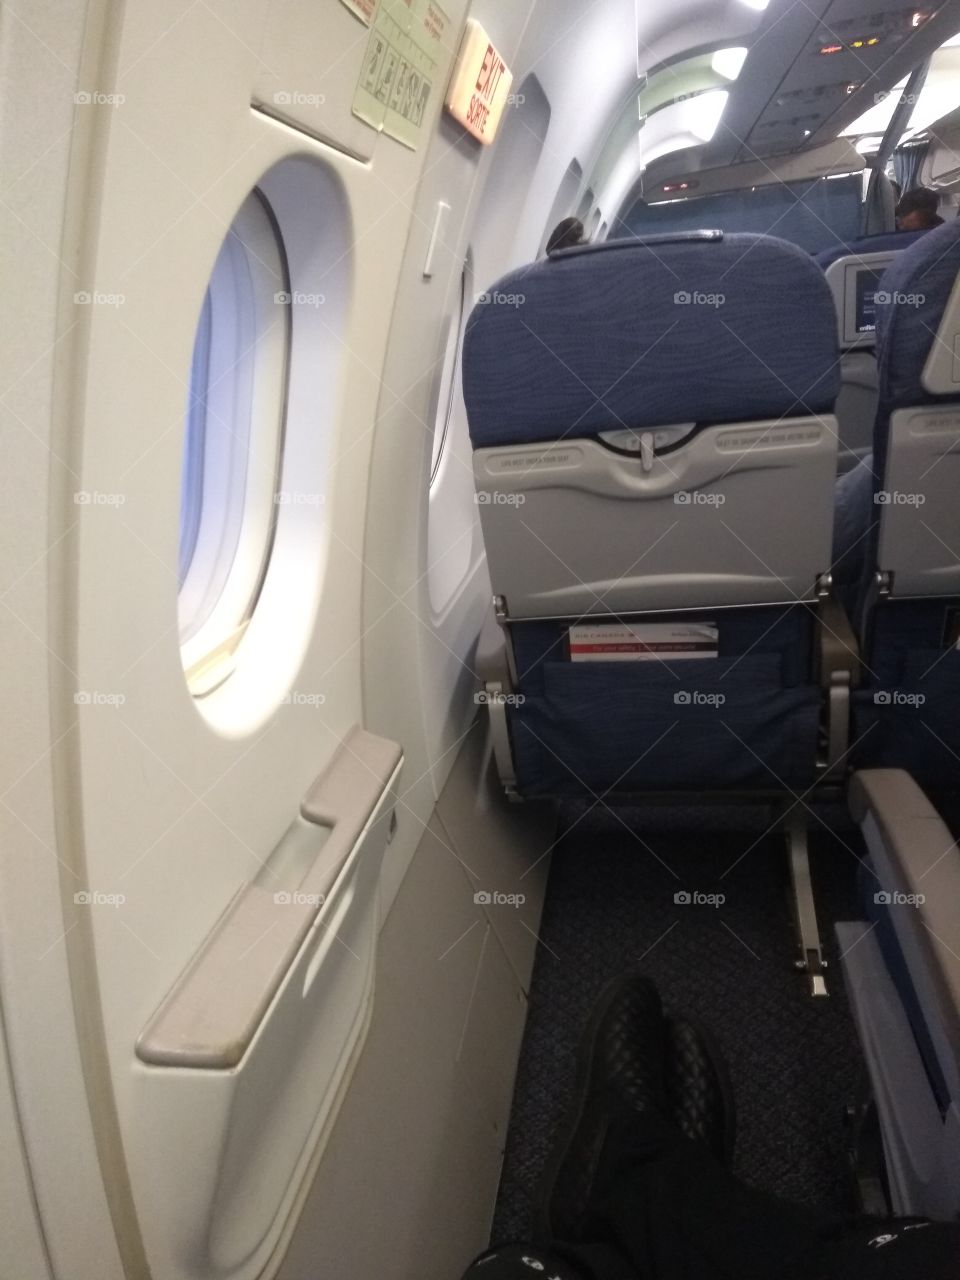 Airplane Leg Room